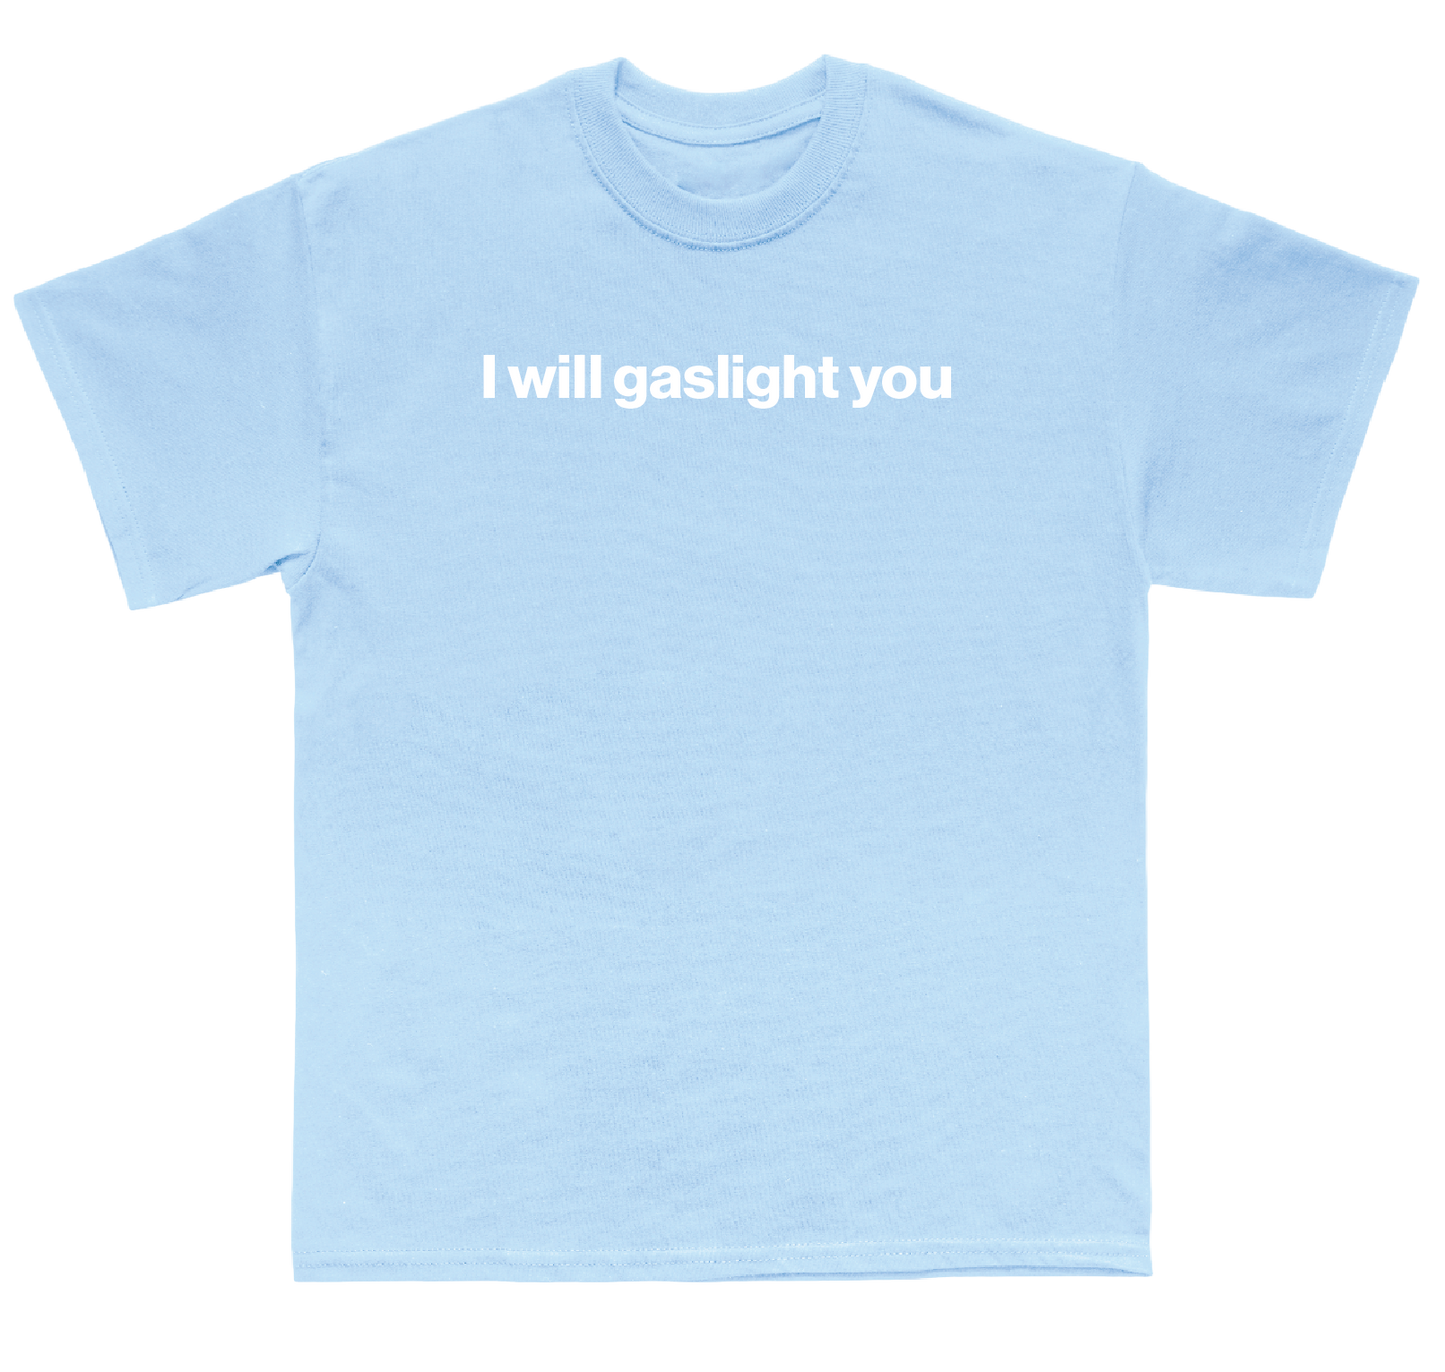 I will gaslight you shirt